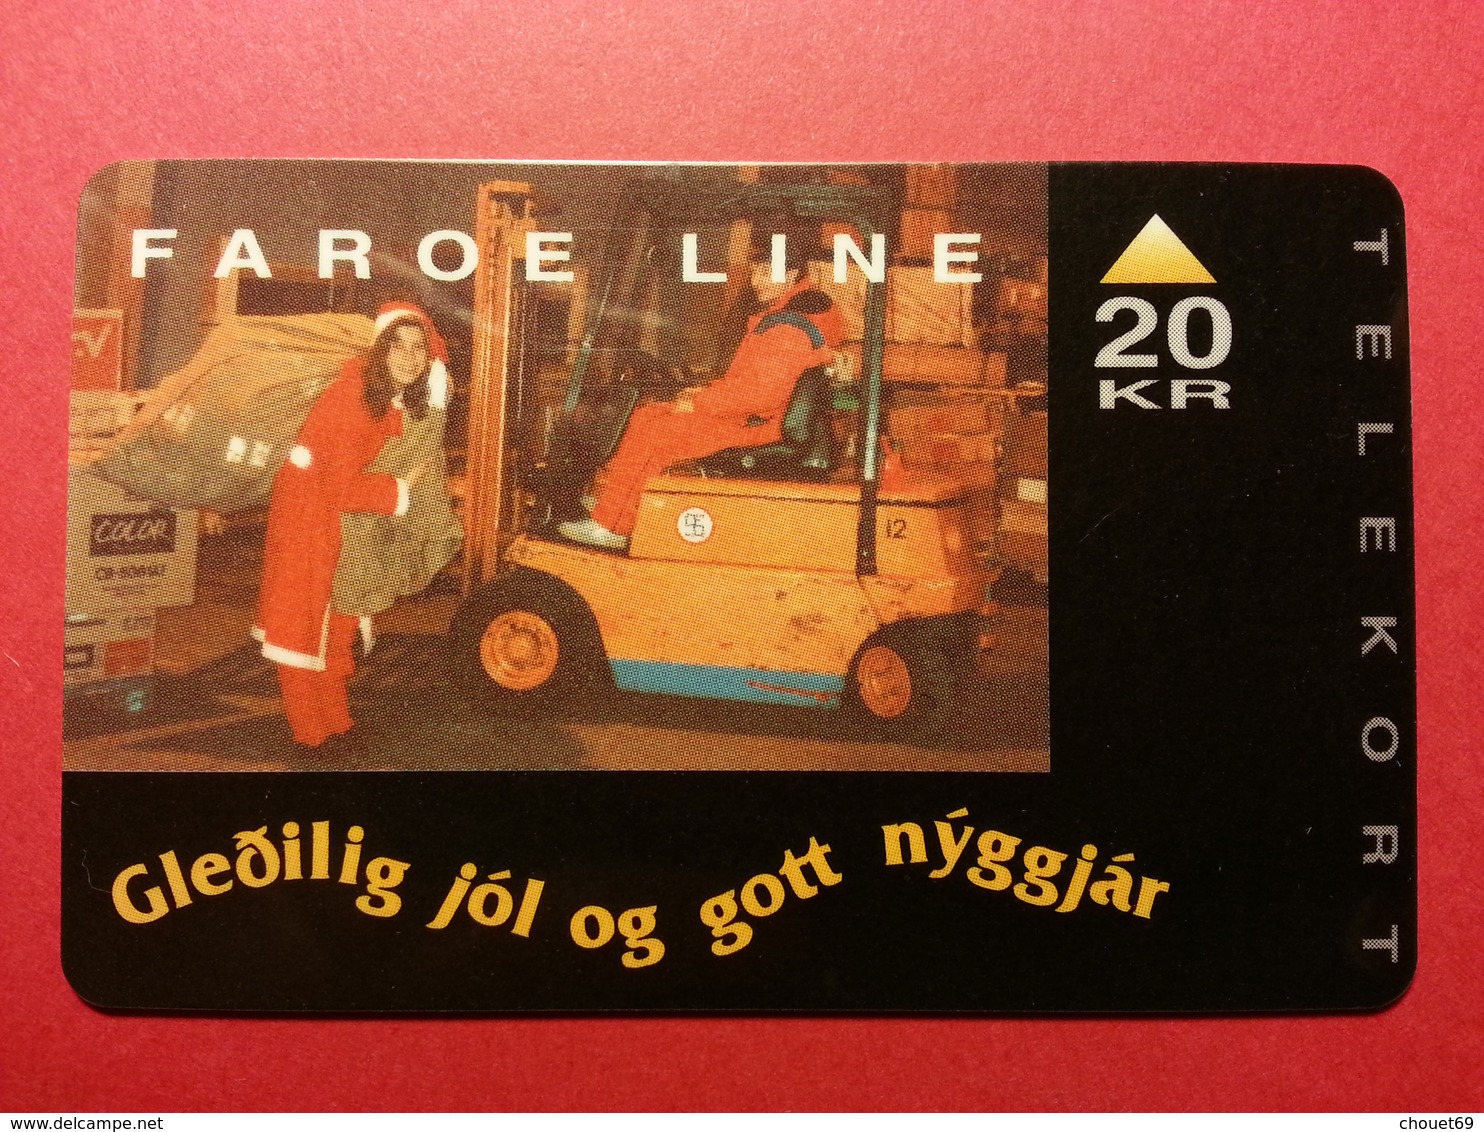 FAROE ISLAND - Faroe Line Christmas 12.1993 - Tirage 2000 Ex - 12/93 (FA0718) - Féroé (Iles)